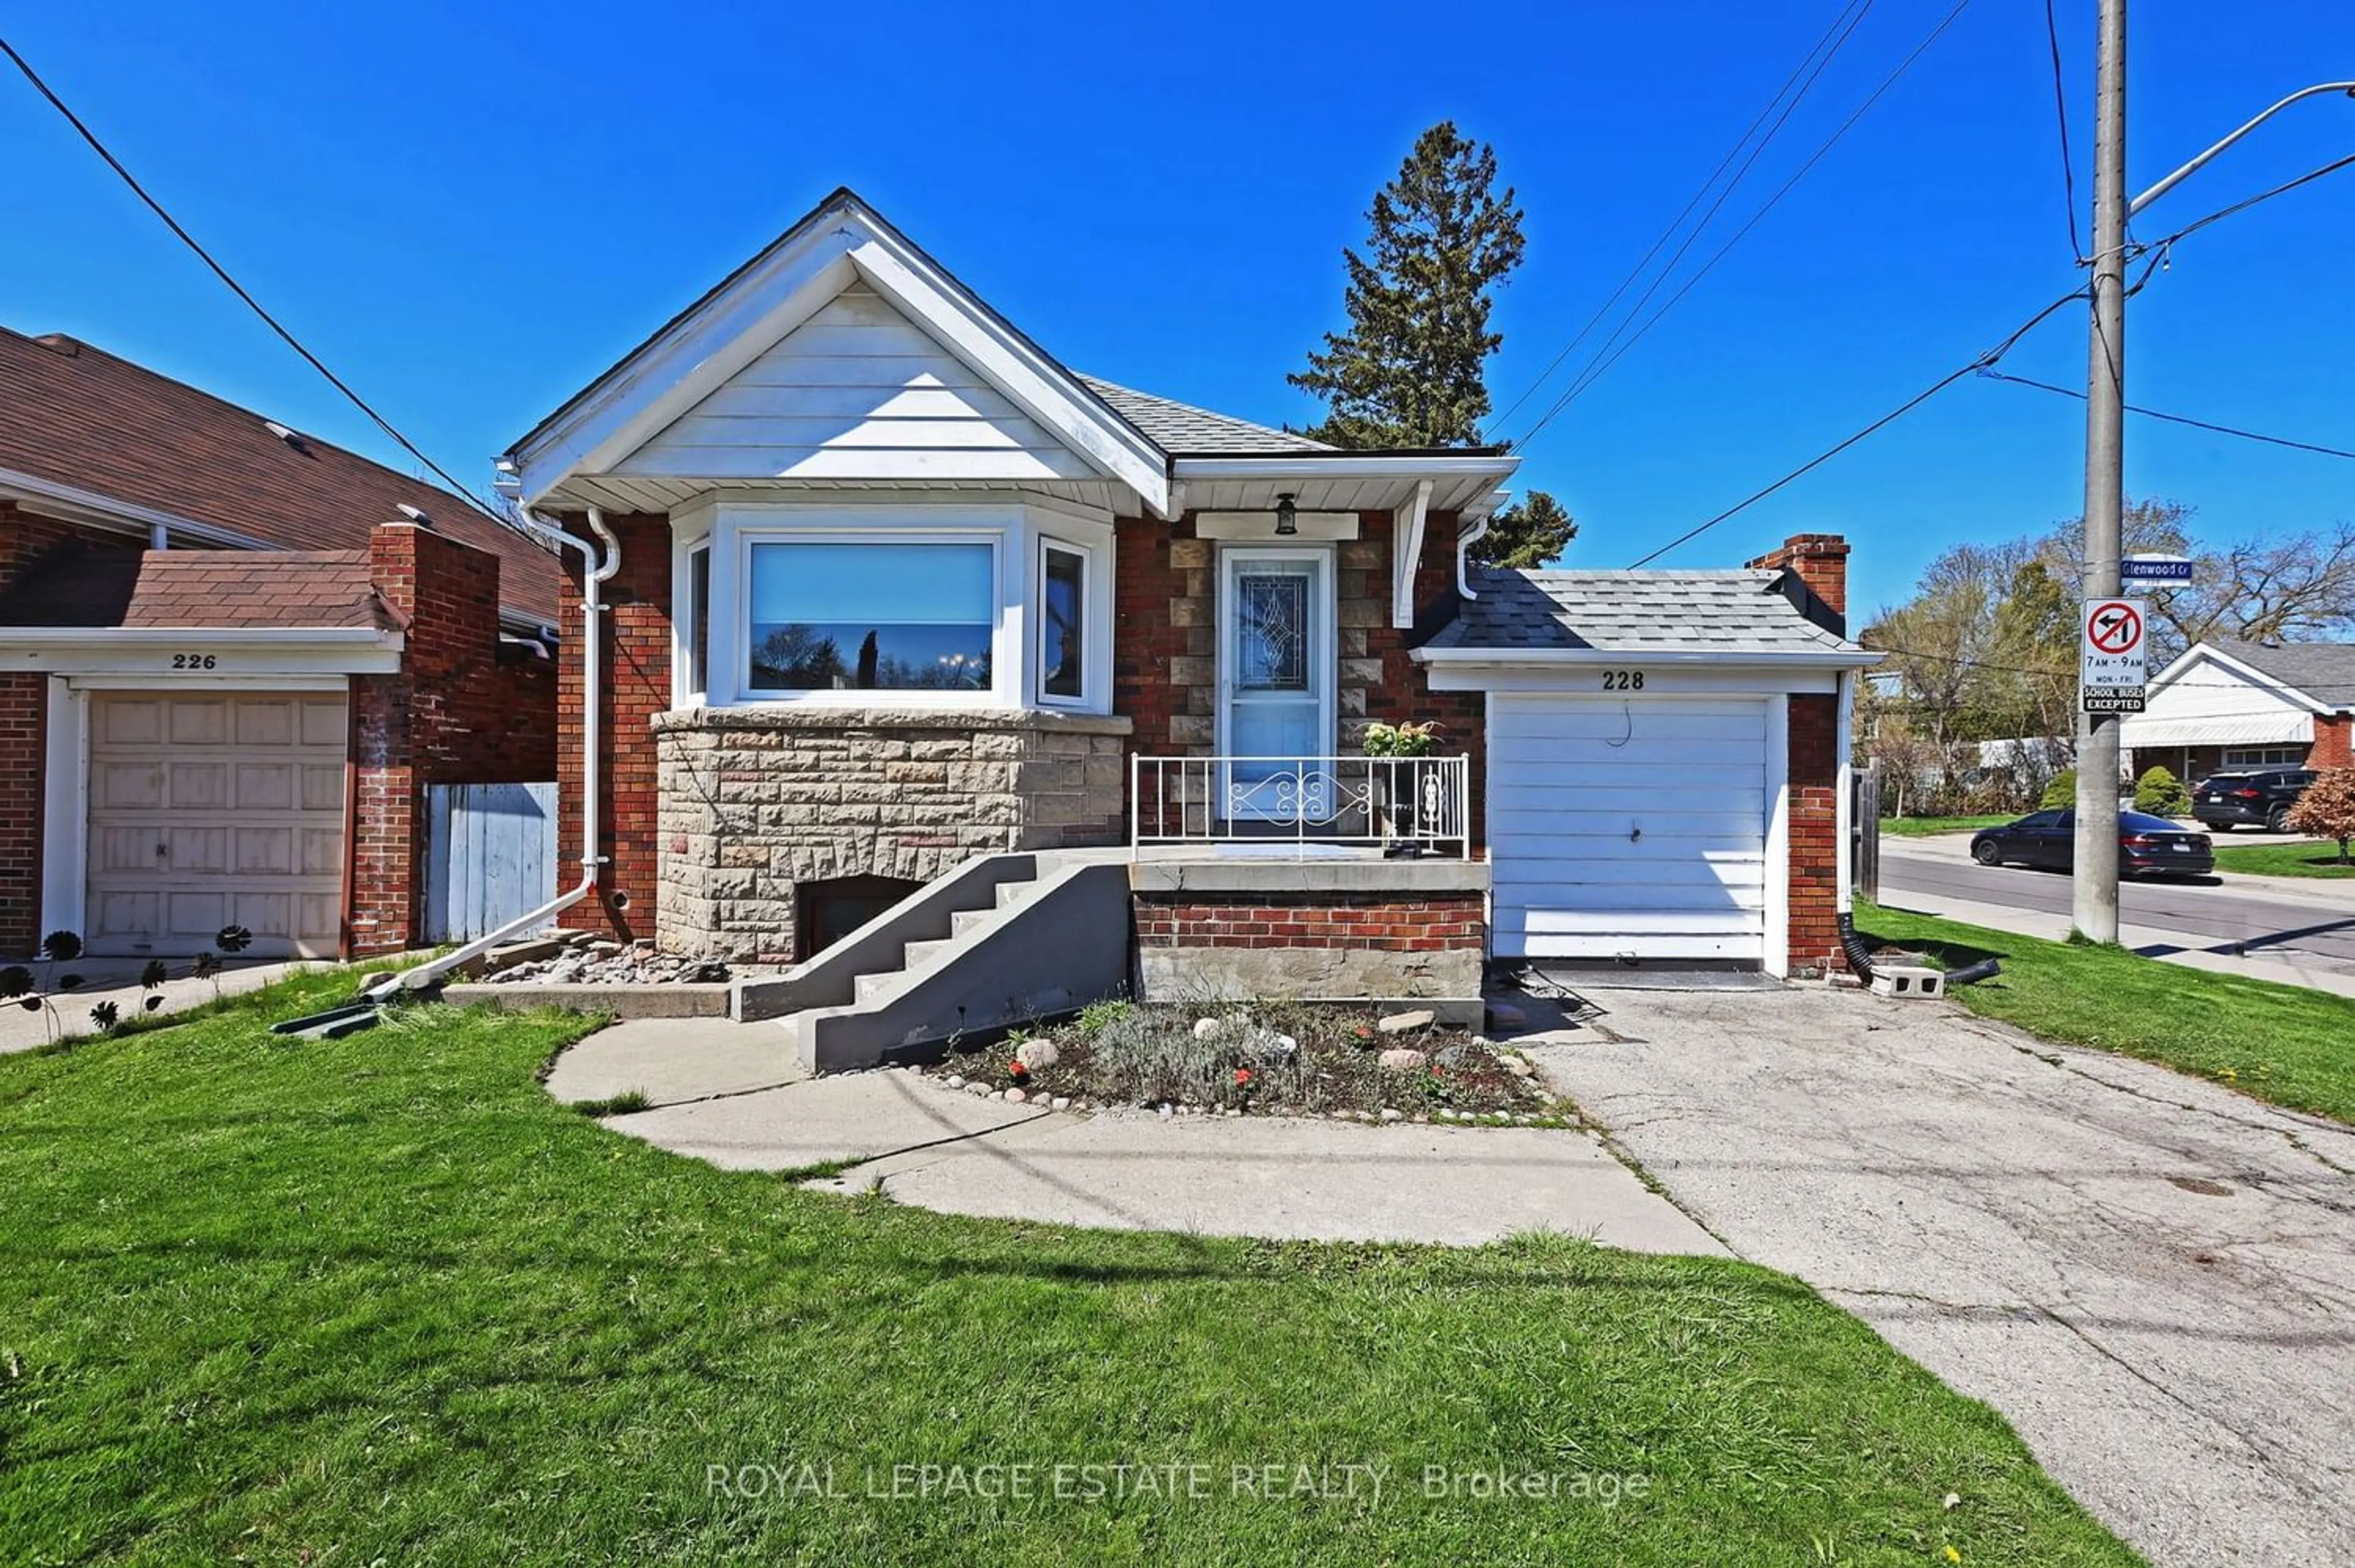 Frontside or backside of a home for 228 Glenwood Cres, Toronto Ontario M4B 1K4